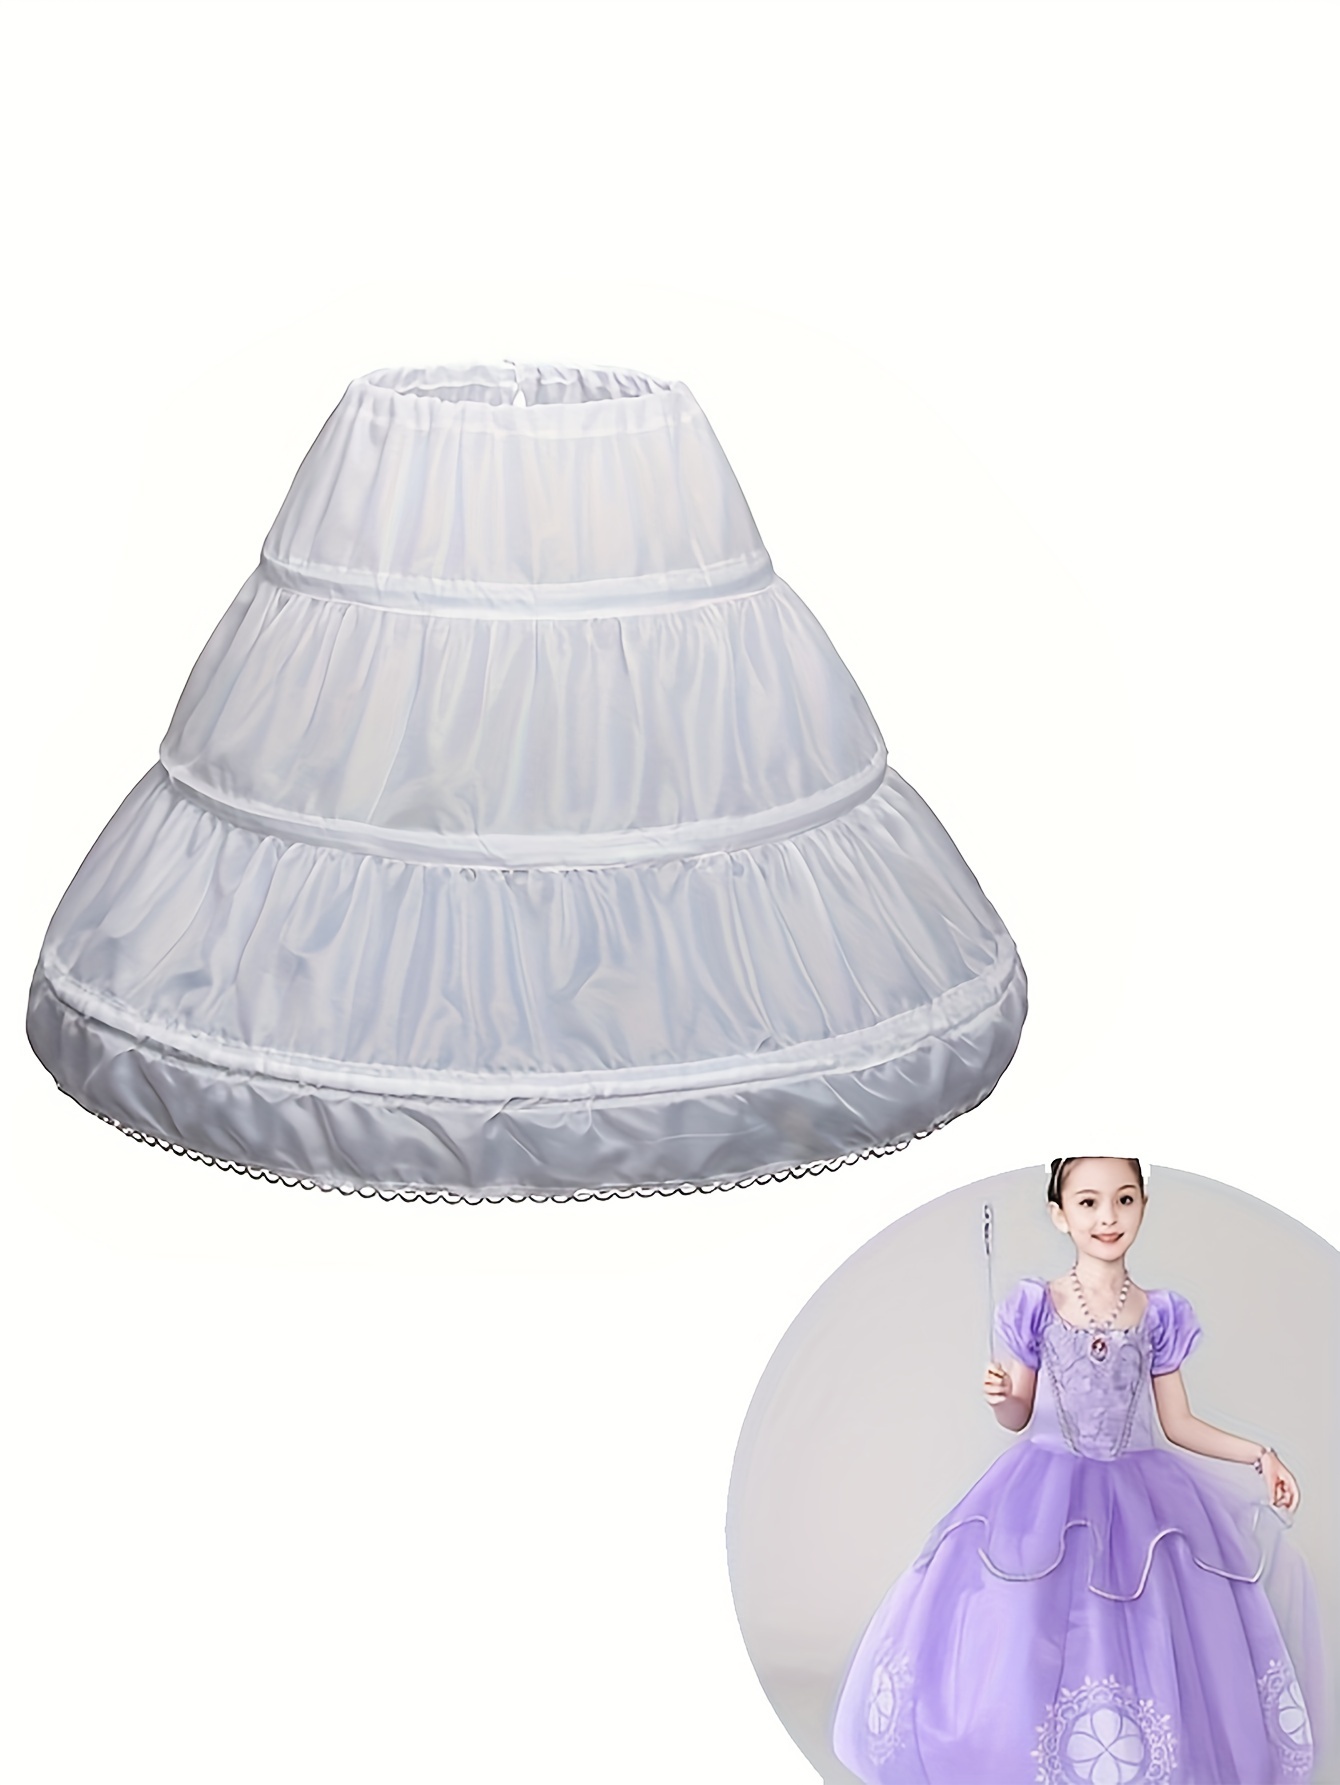 Kid's Hoop Skirt for Dress Up Party Girl's 4 Hoop Short Crinoline Cage  Petticoat 